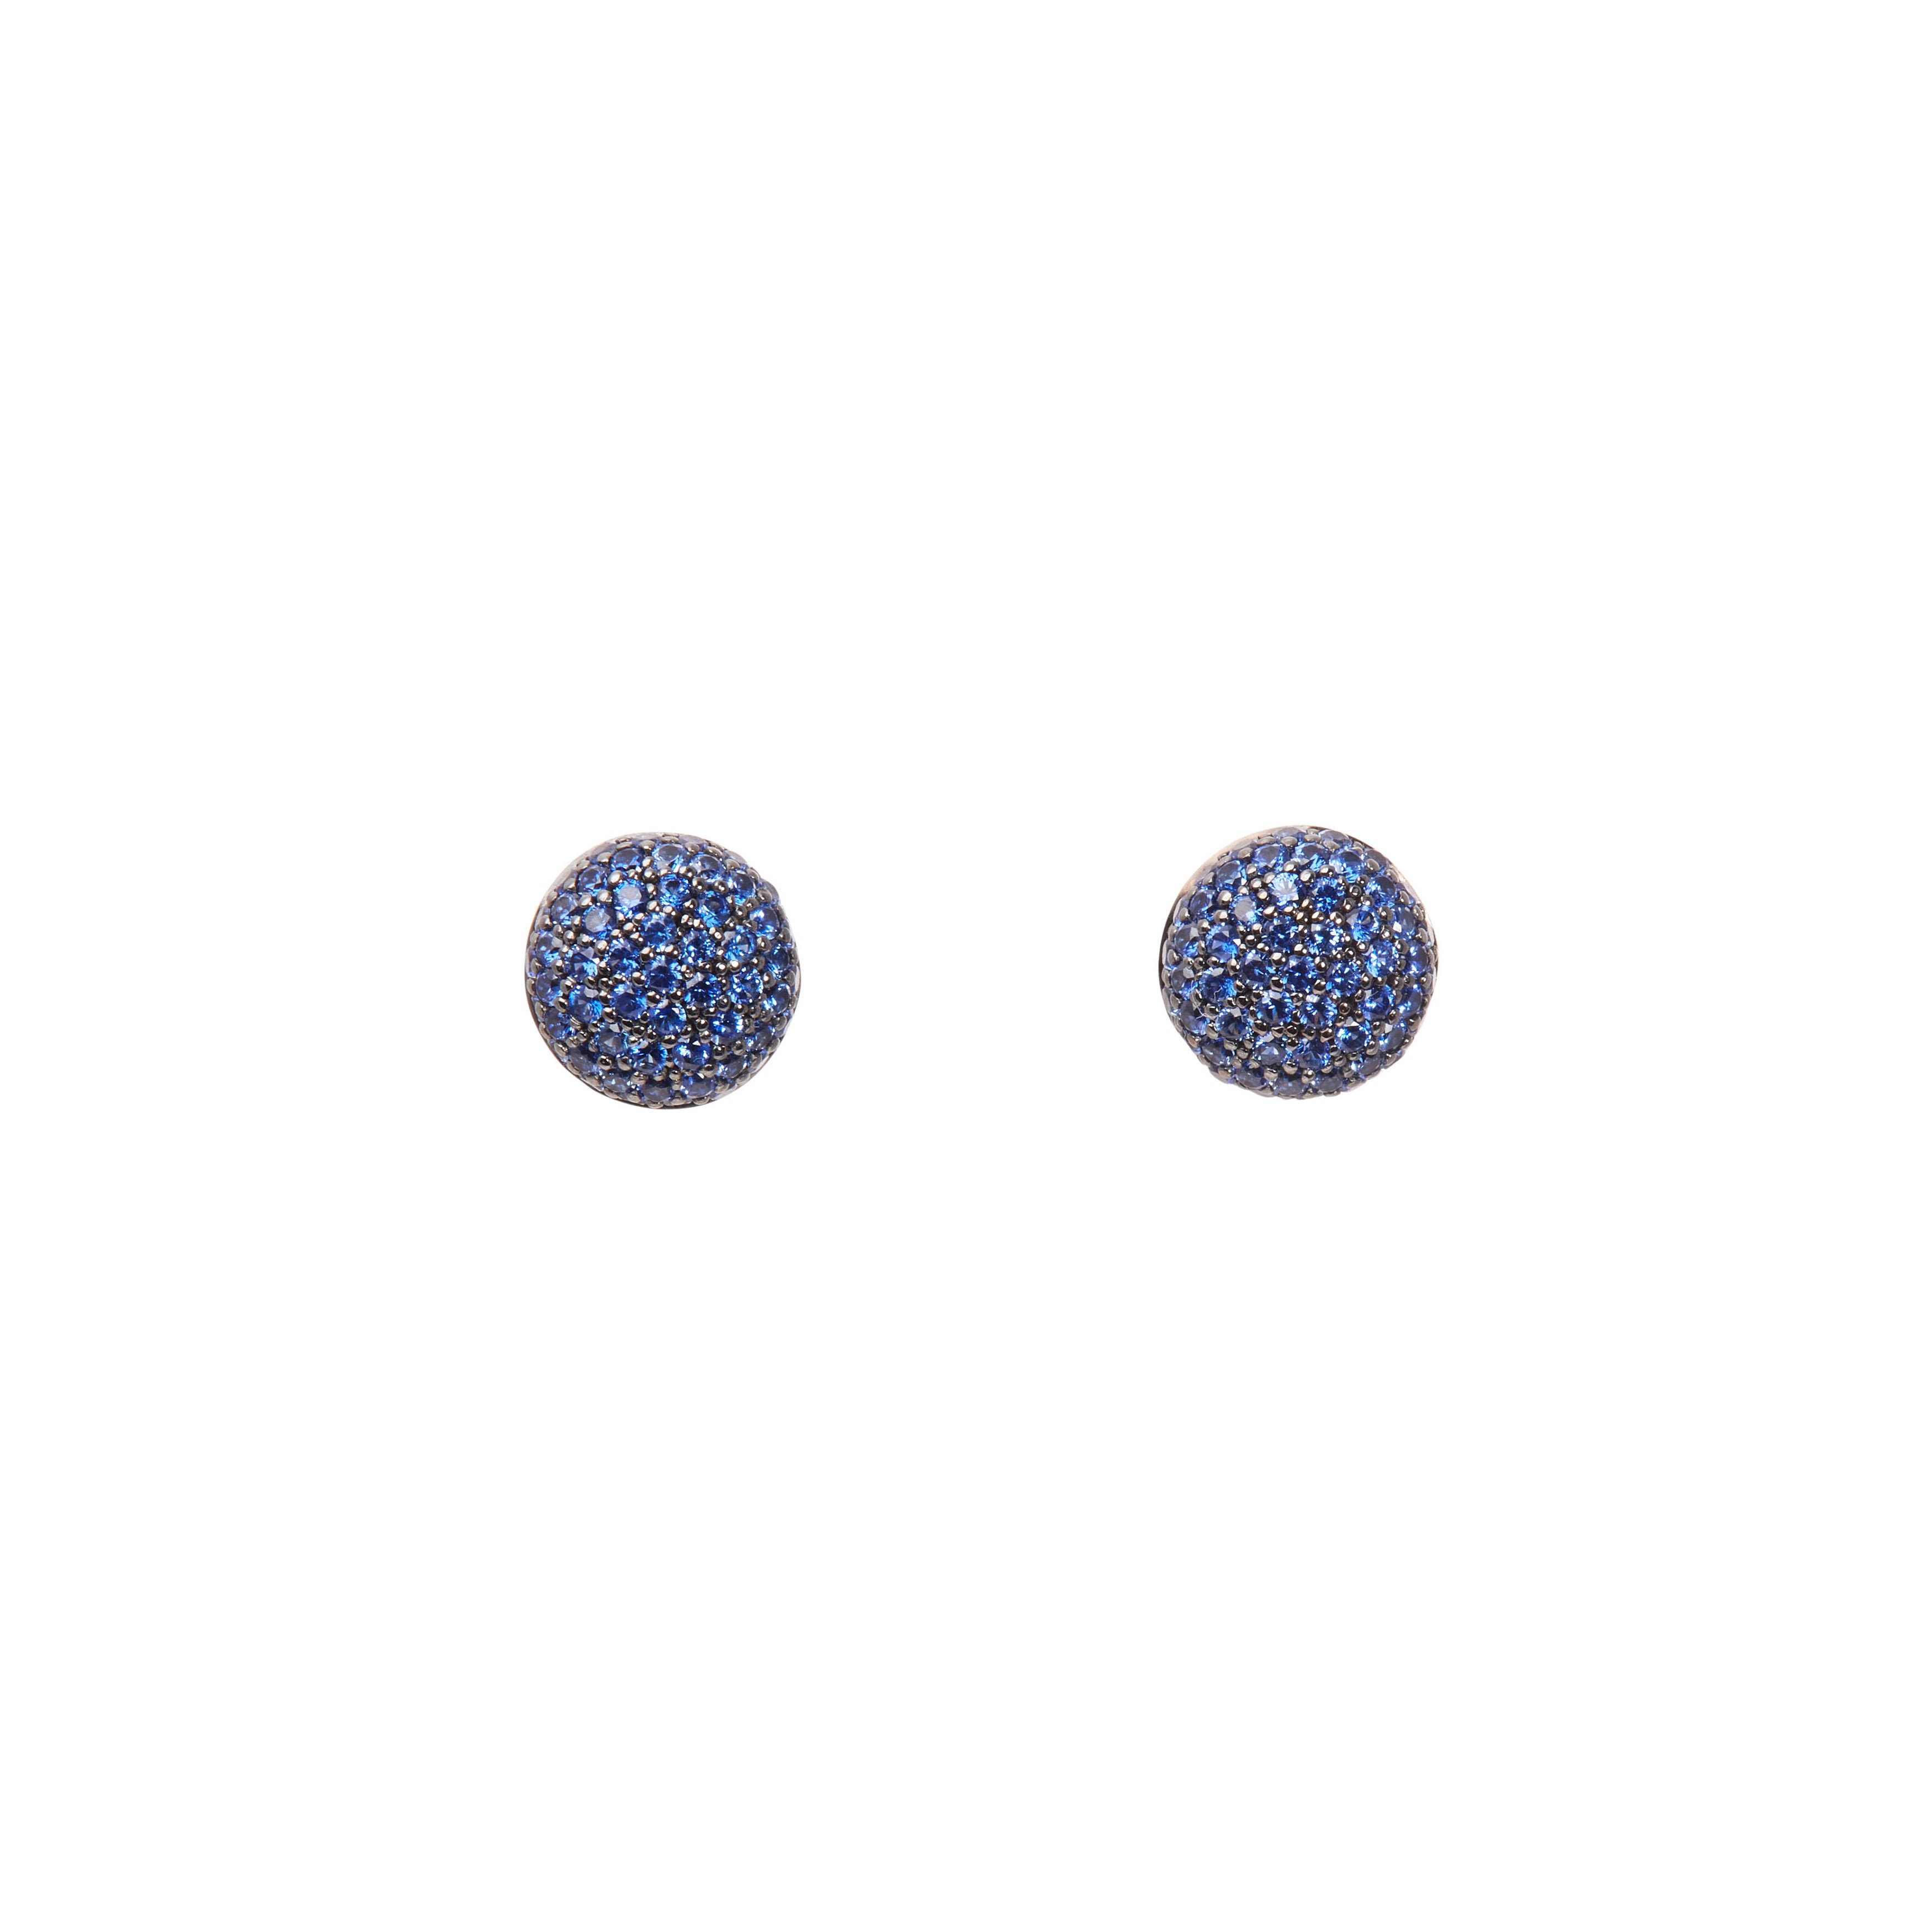 Thumbtack stud earrings – Shepherd's Run Jewelry